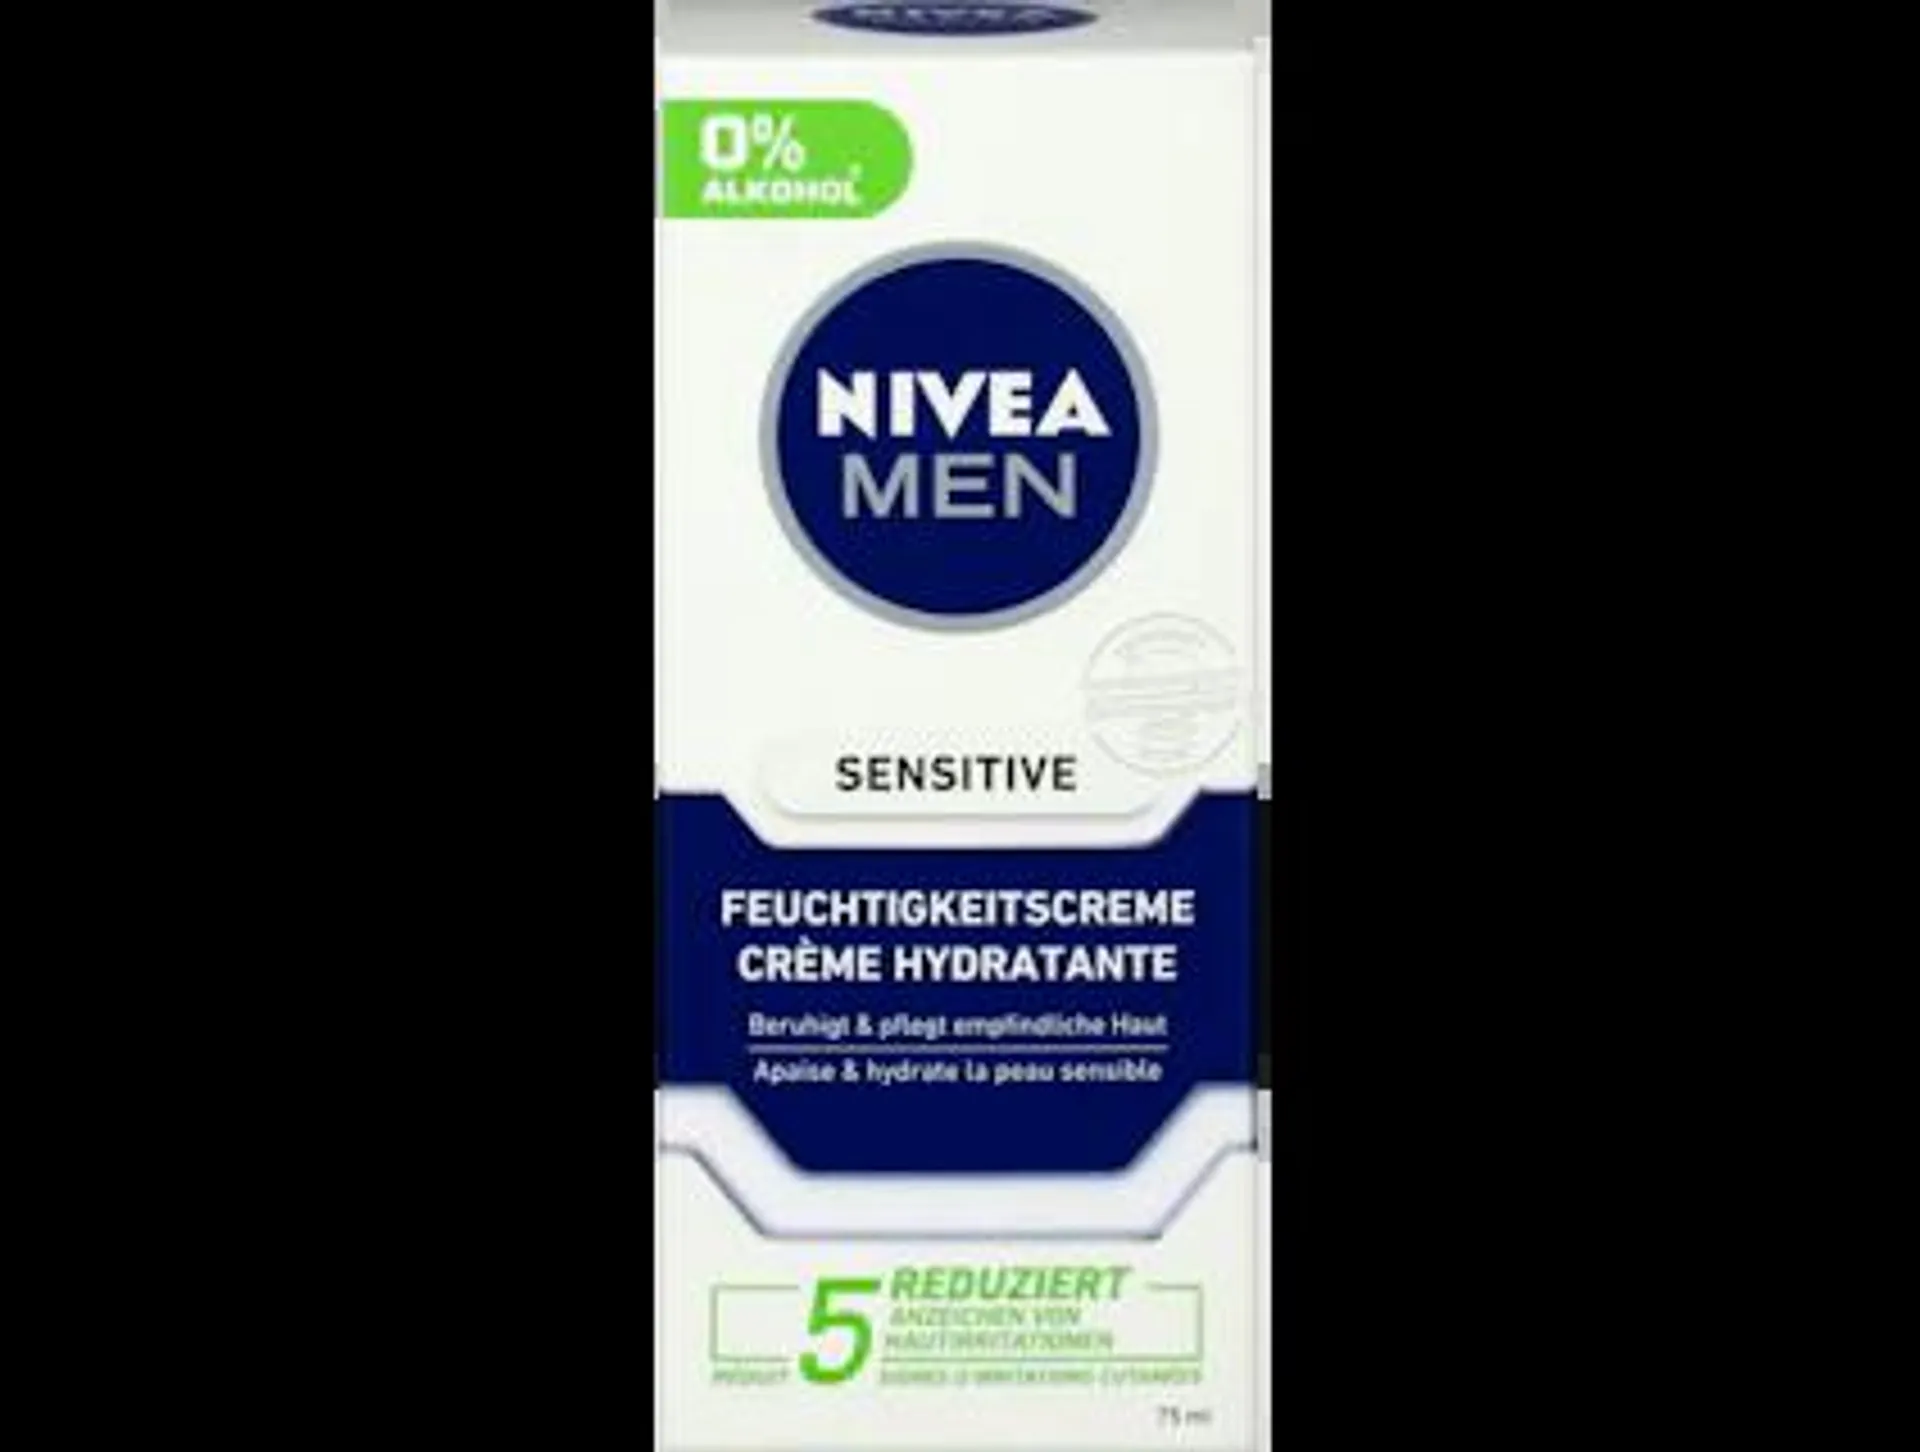 Crème hydratante Sensitive Nivea Men